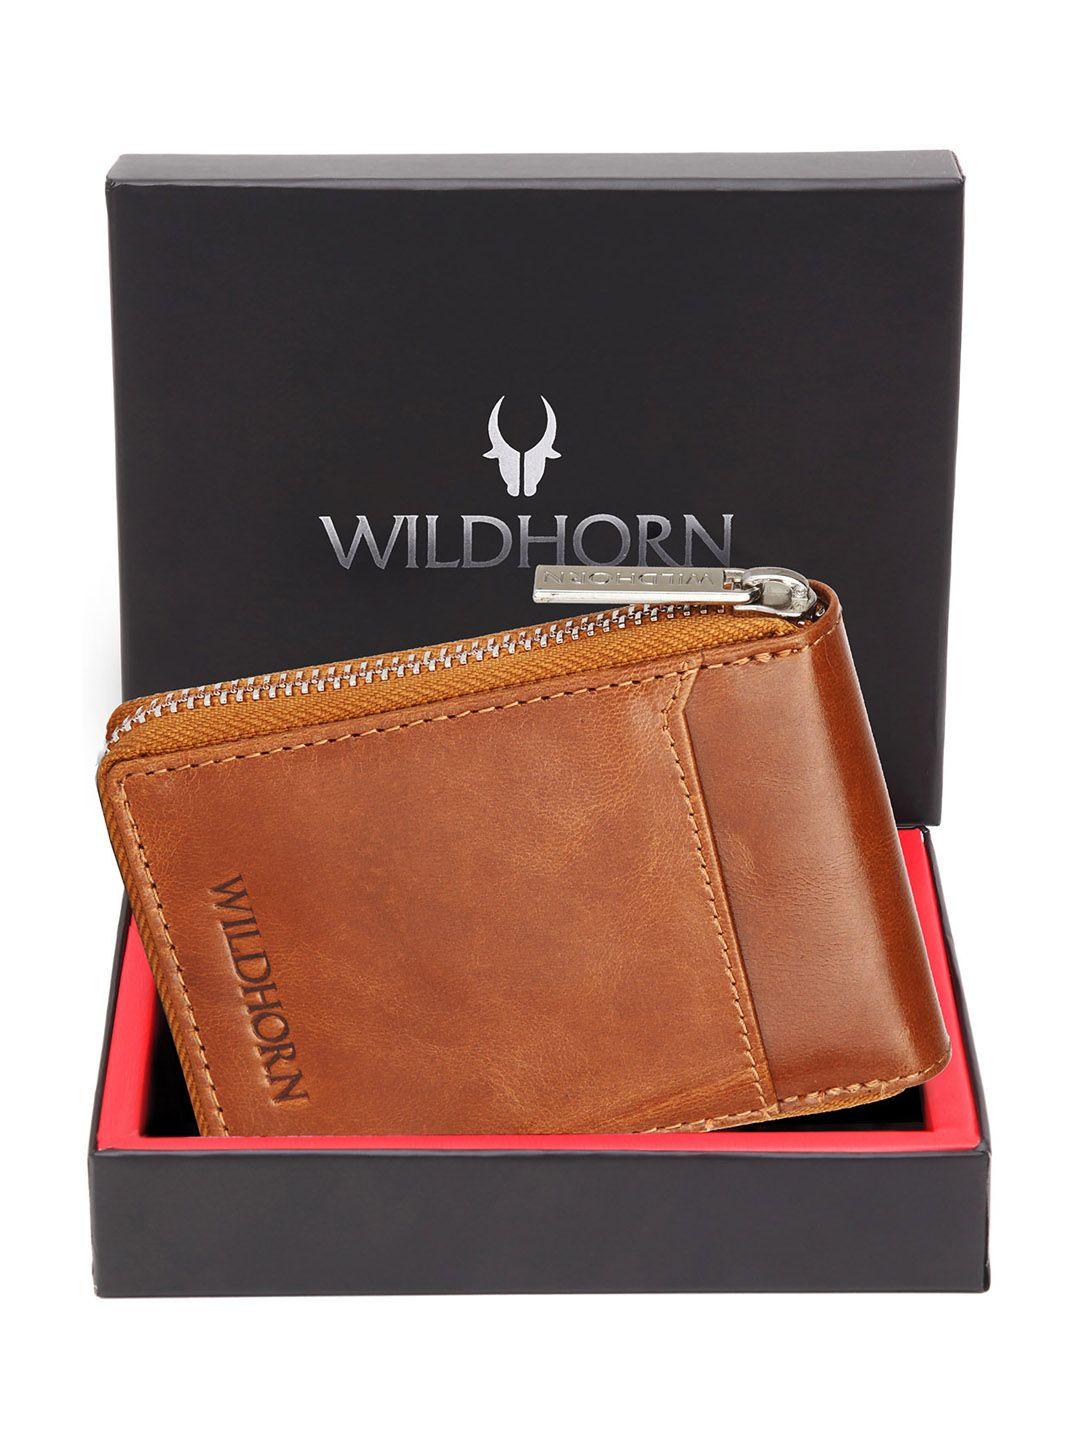 wildhorn unisex tan leather card holder